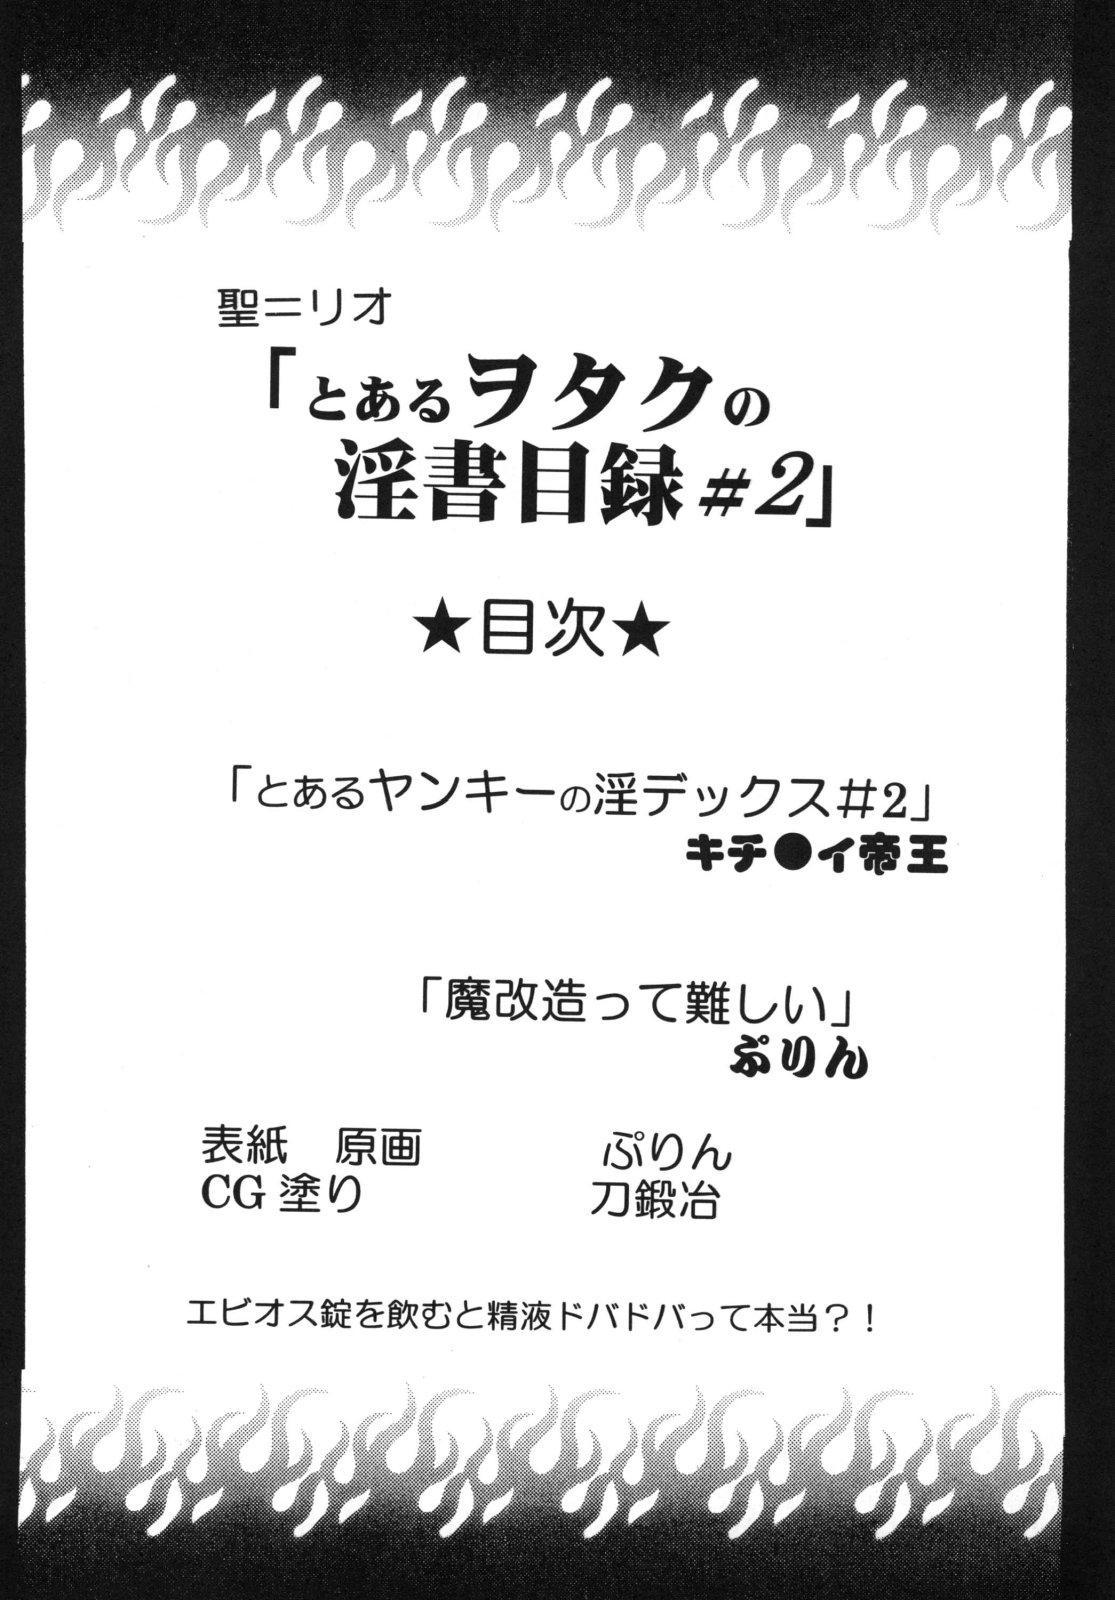 No Condom Toaru Otaku no Index #2 | 某魔术的淫蒂克丝，某不良少年的茵蒂克丝#2 - Toaru majutsu no index | a certain magical index Affair - Page 3